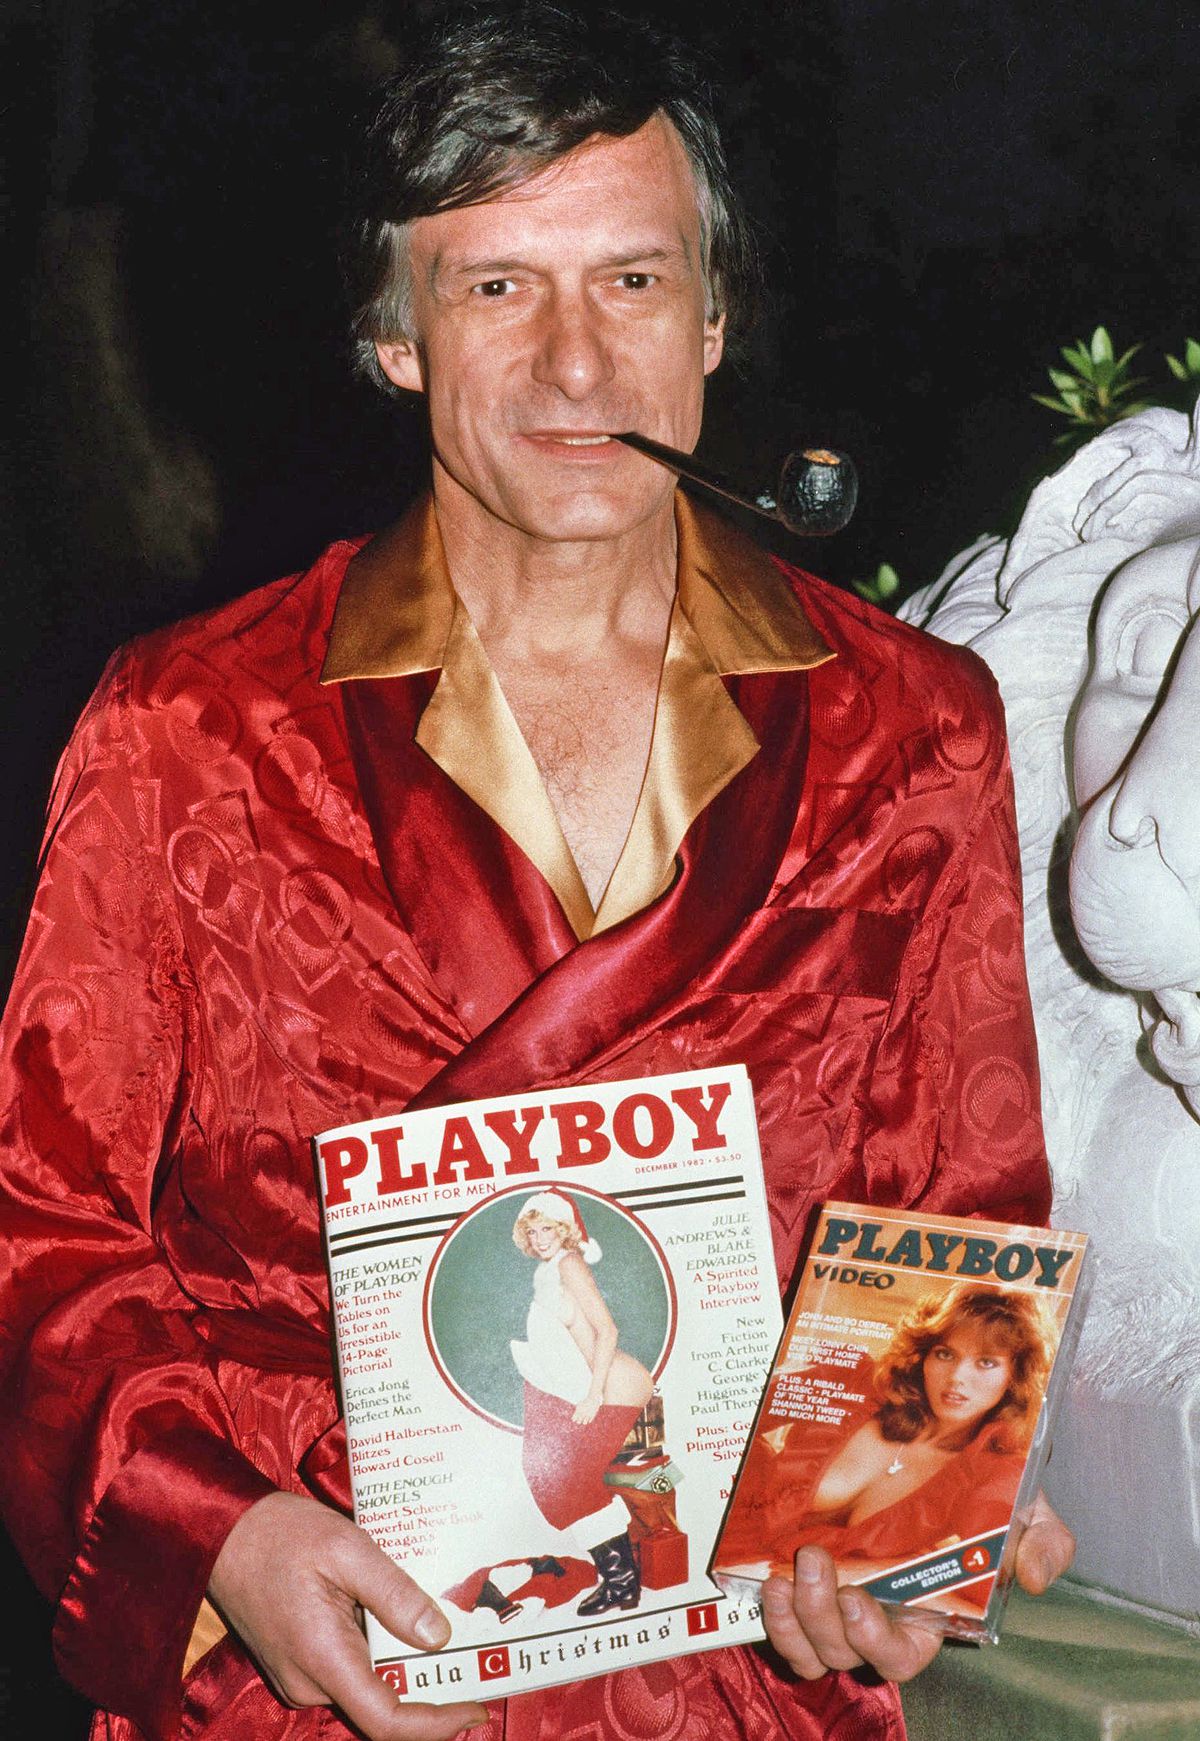 Mandatory Credit: Photo by Nick Ut/AP/REX/Shutterstock (6555506a)
Playboy founder Hugh Hefner shown with a Playboy Magazine and Playboy video
Hugh Hefner, USA